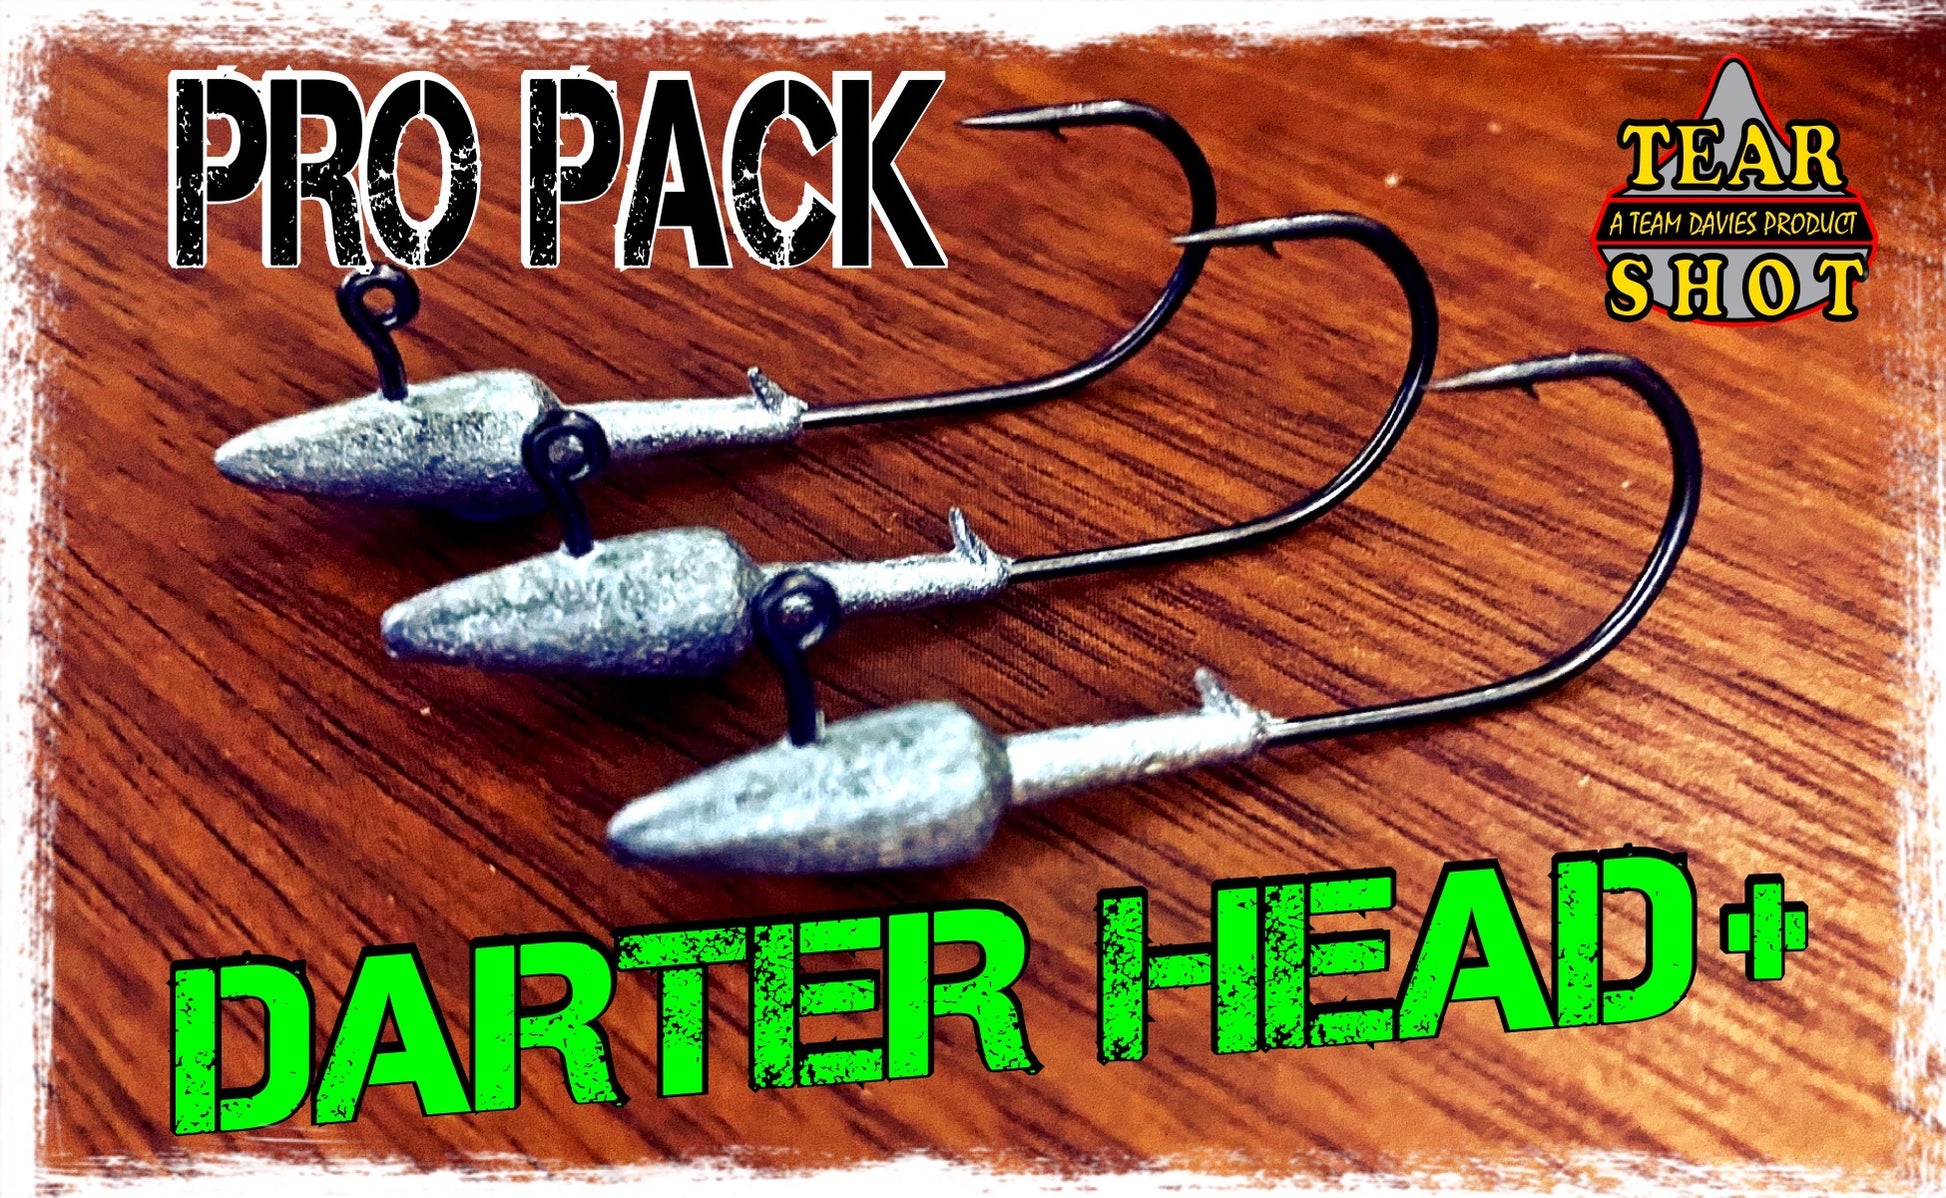 Darter Head Jigs - Pro Pack – Tear Shot - Team Davies Tackle Company -  Tournament Quality Drop Shot Sinkers and Fishing Tackle